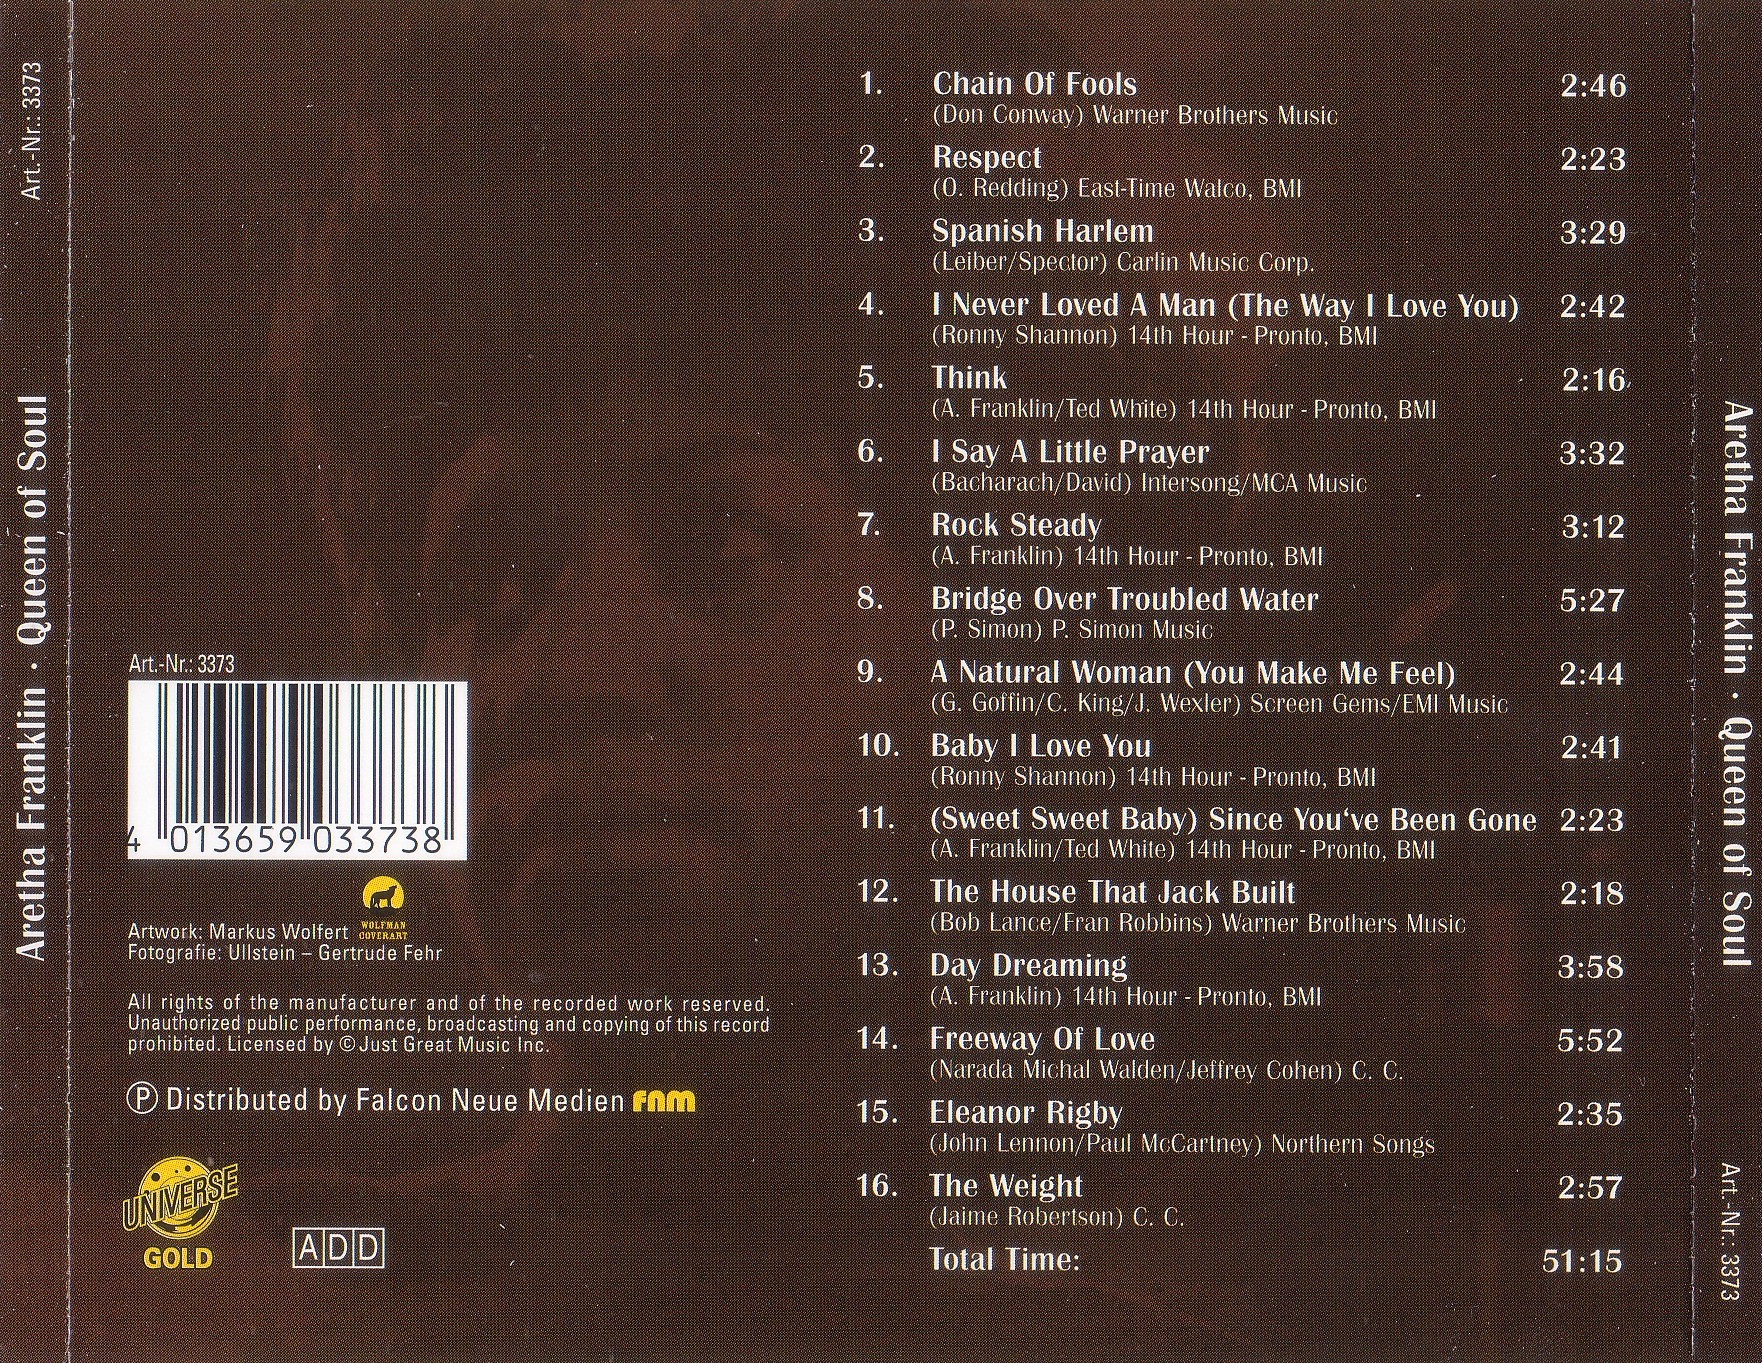 Copertina cd Aretha Franklin - Queen Of Soul - Back, cover cd Aretha ...